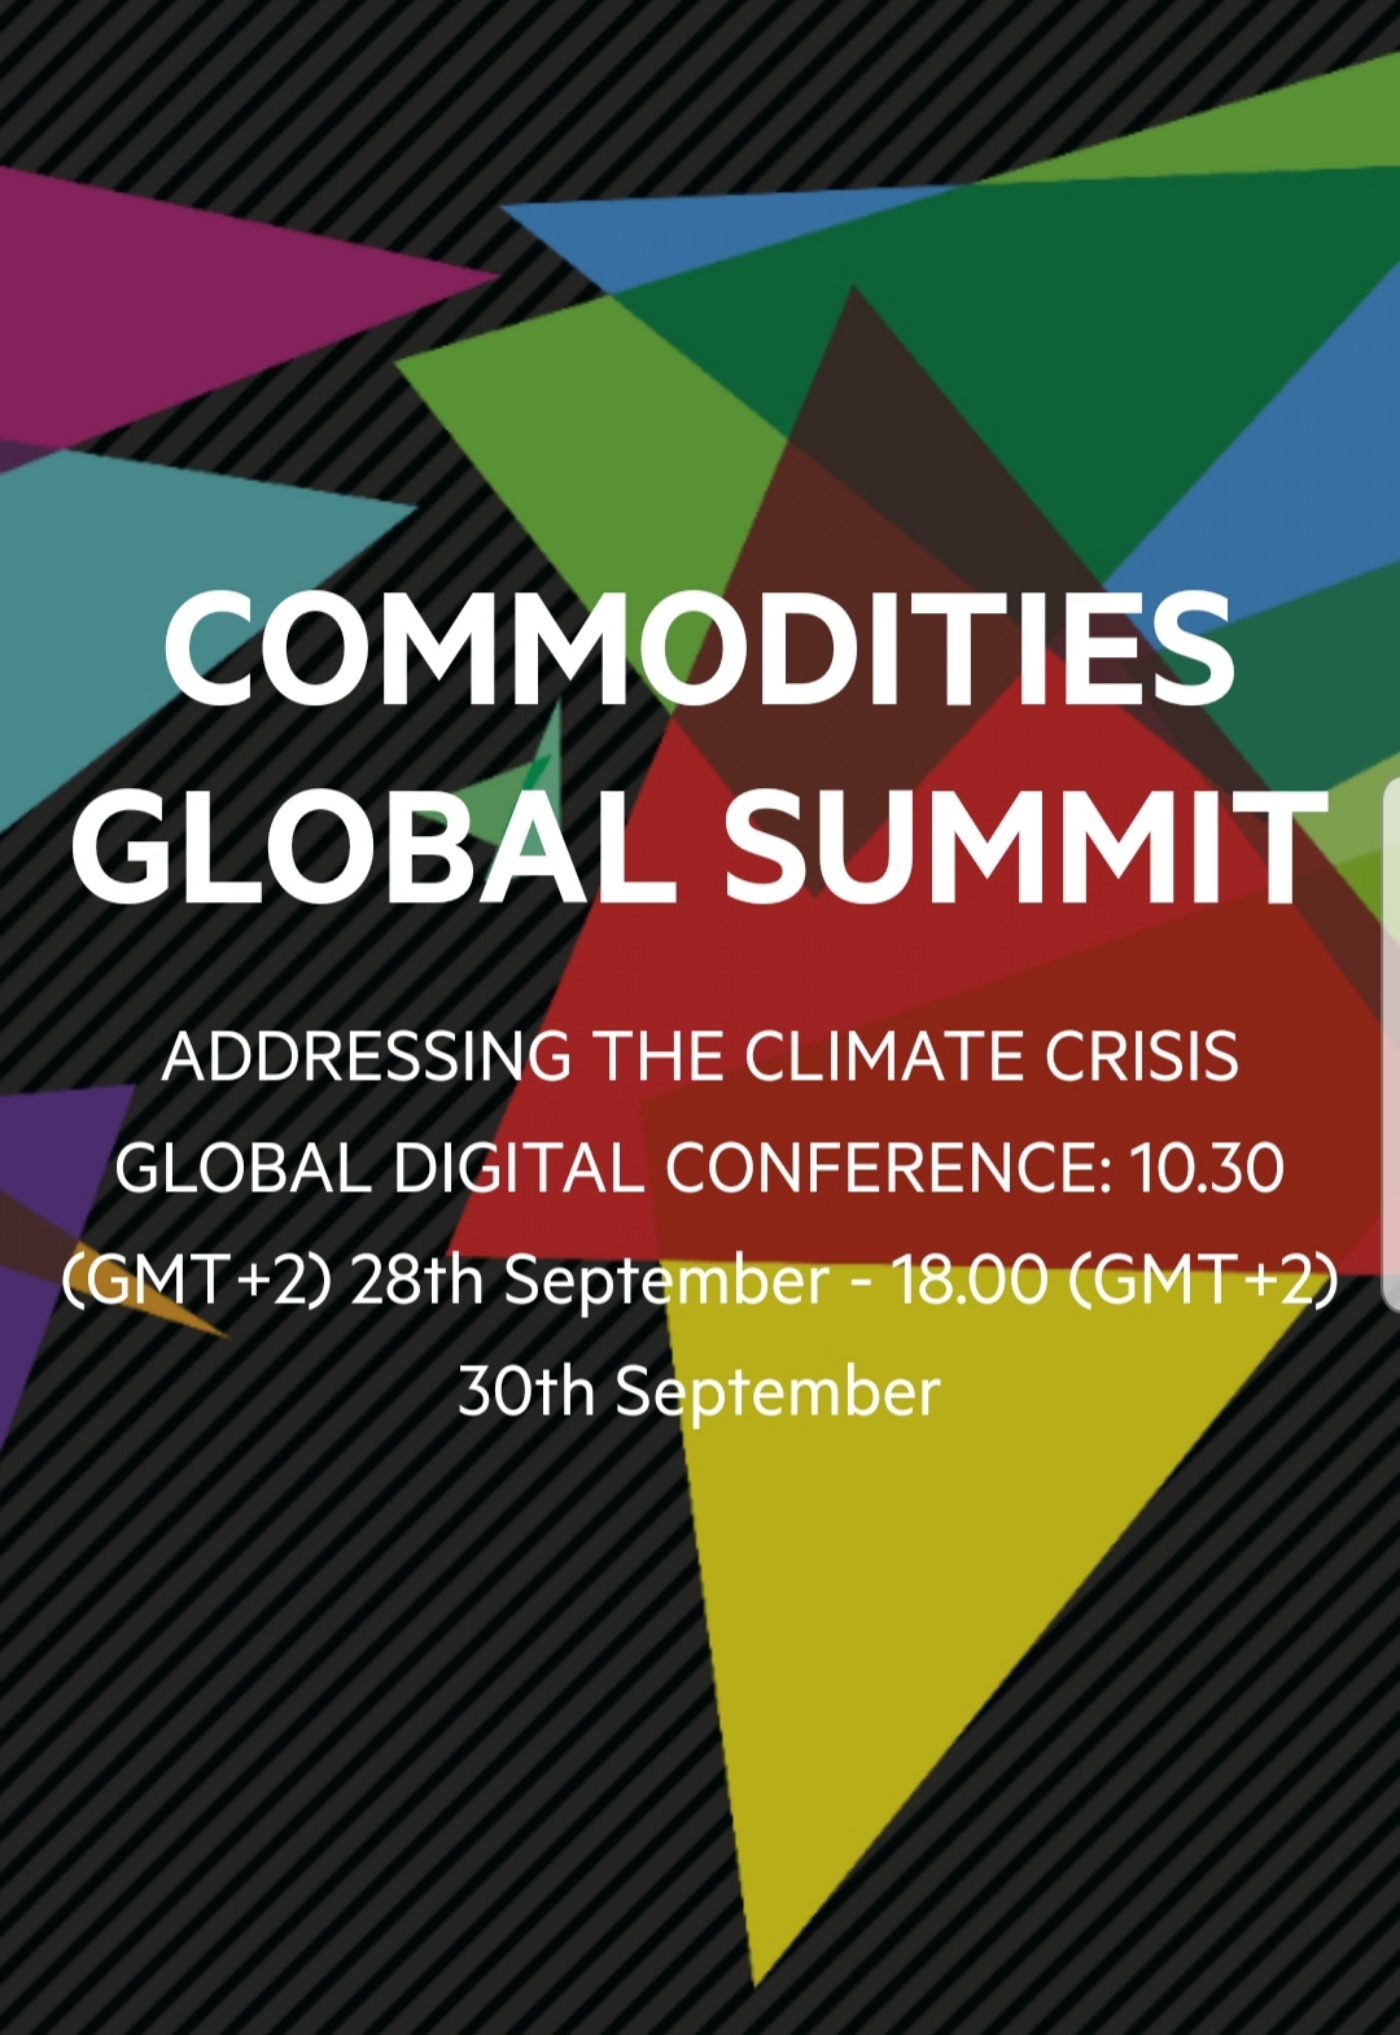 لوتکەی جیهانی شمەکە سەرەکییەکان(فاینانشاڵ تایمز)                                        و باسکردنی قۆناغی ڕاگوزەری وزە.       FT  Commodities  Global Summit